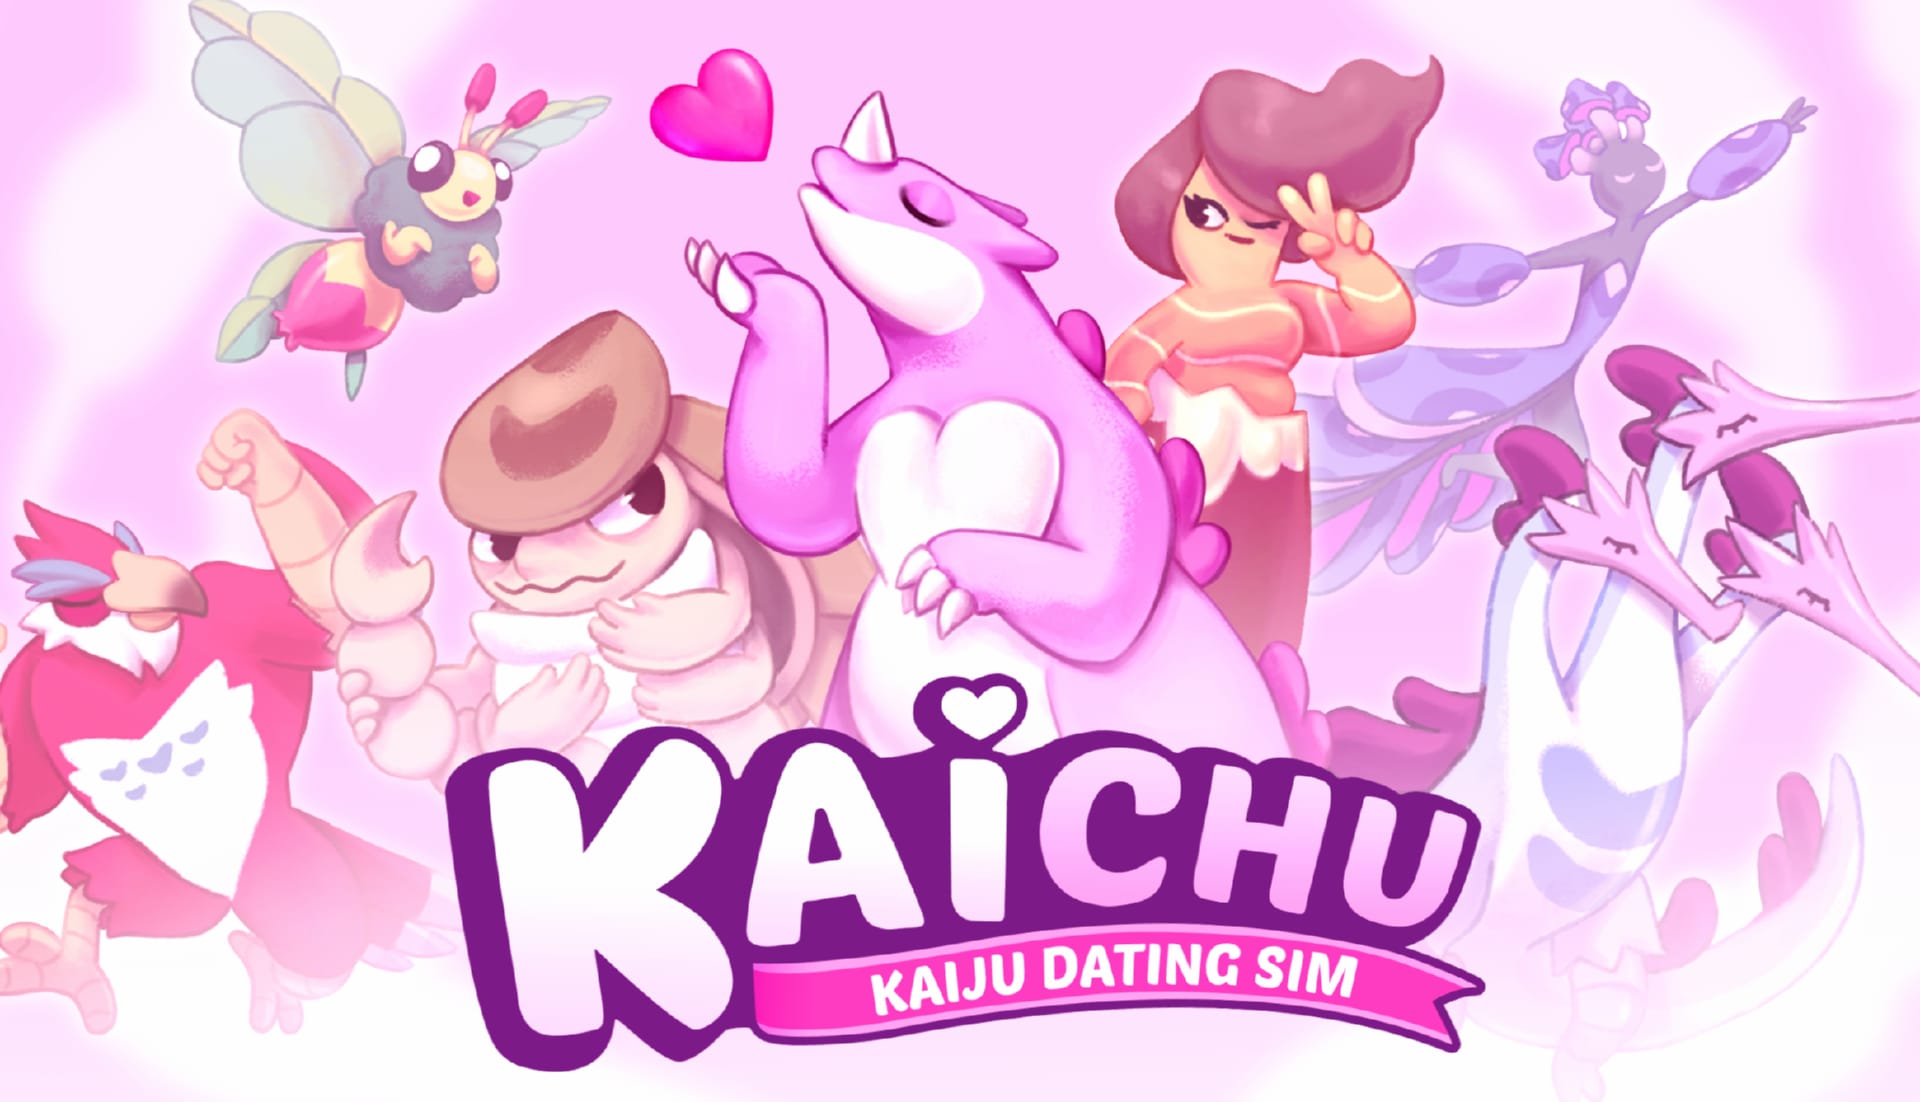 Kaichu - The Kaiju Dating Sim at 2048 x 2048 iPad size wallpapers HD quality